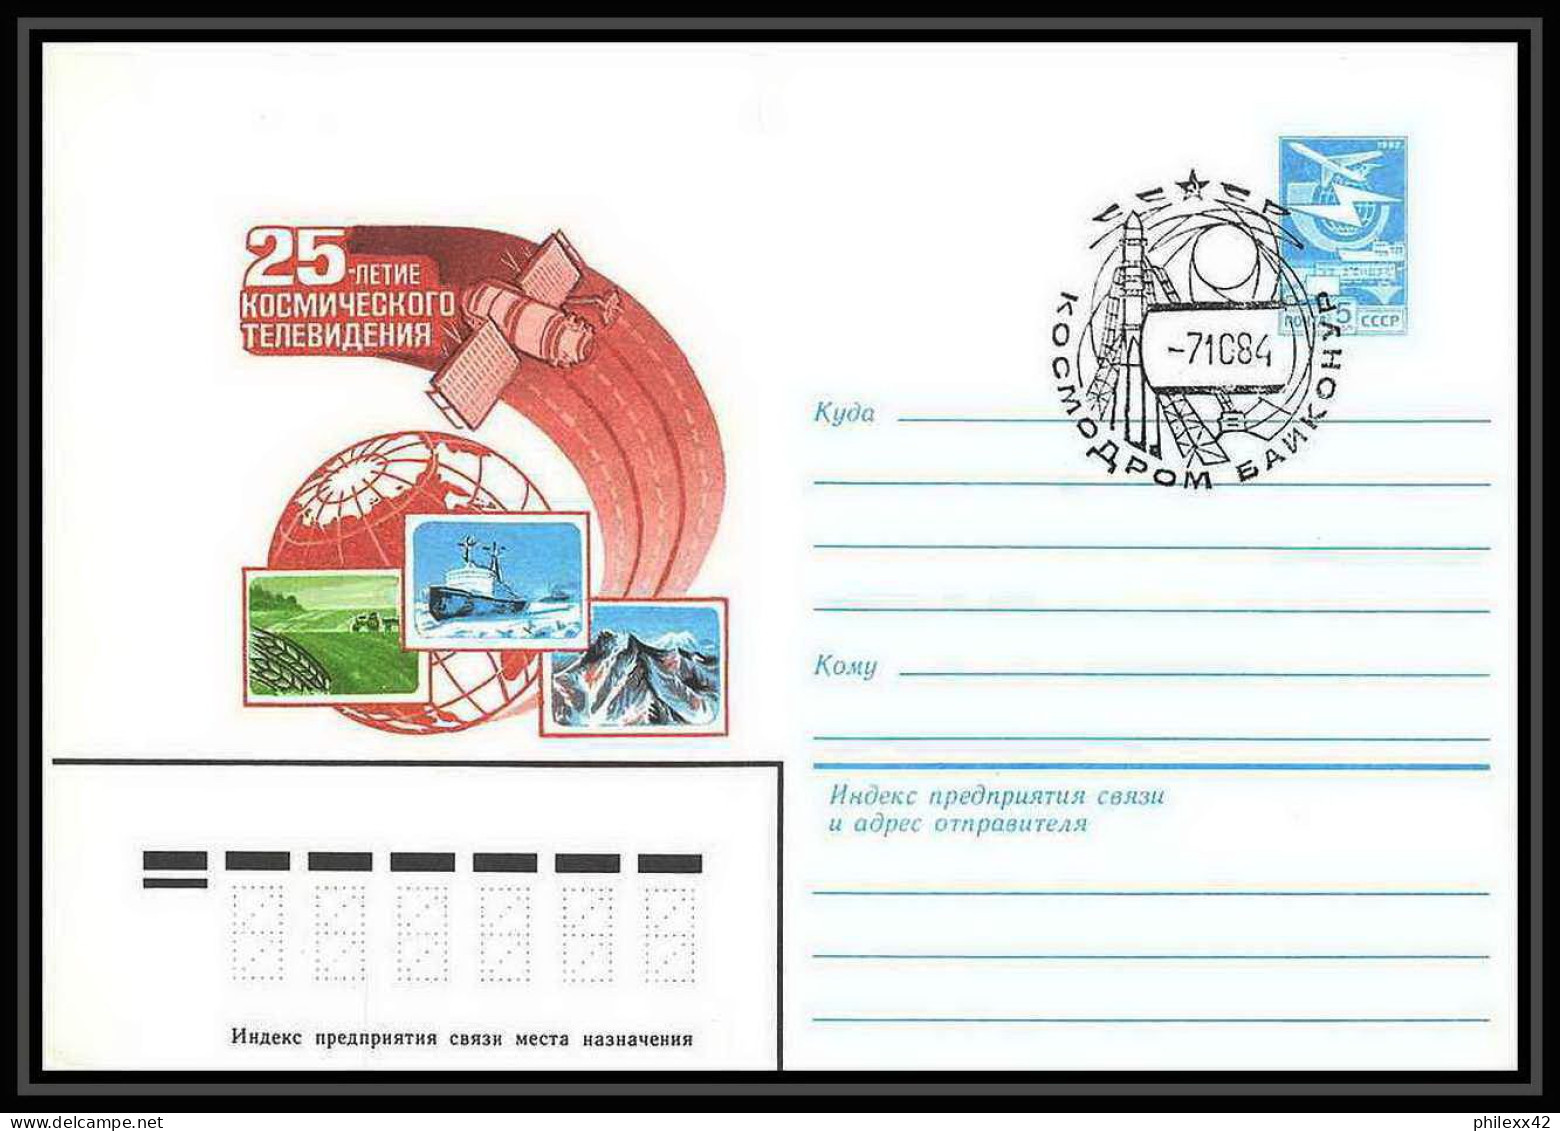 9154/ Espace (space Raumfahrt) Entier Postal (Stamped Stationery) 7/10/1984 (Russia Urss USSR) - Russie & URSS